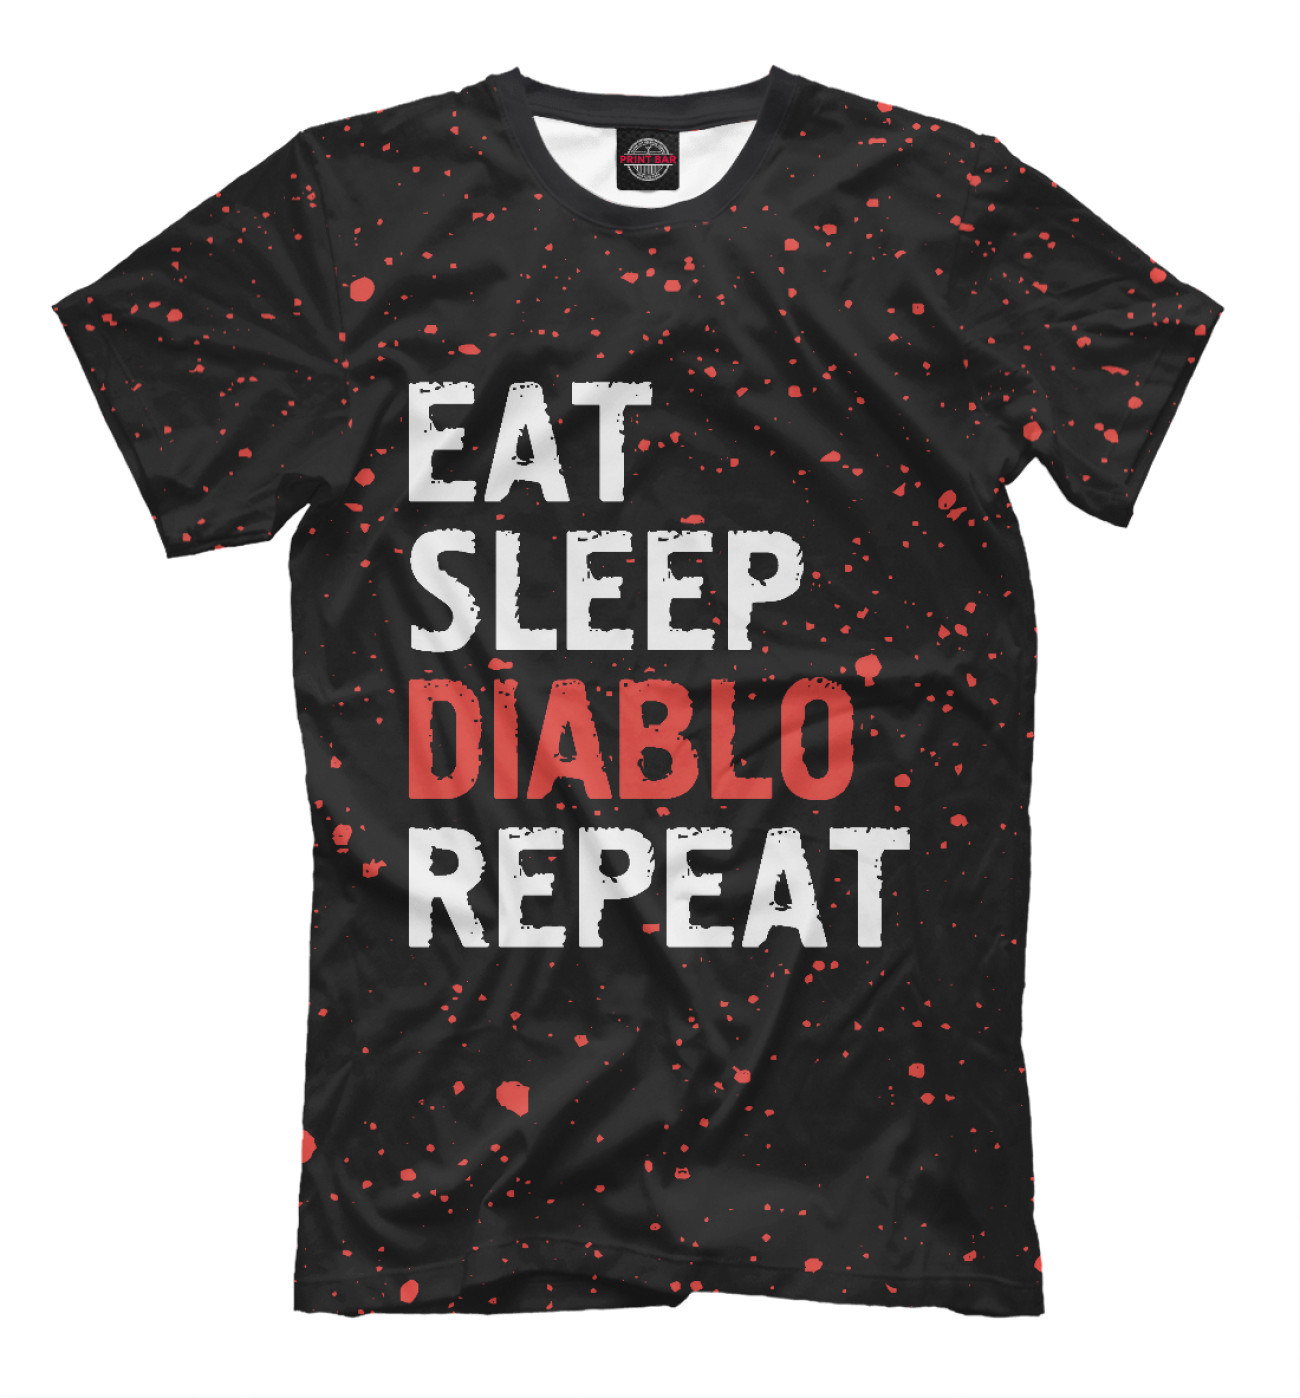 Мужская Футболка Eat Sleep Diablo Repeat, артикул: DIO-922422-fut-2